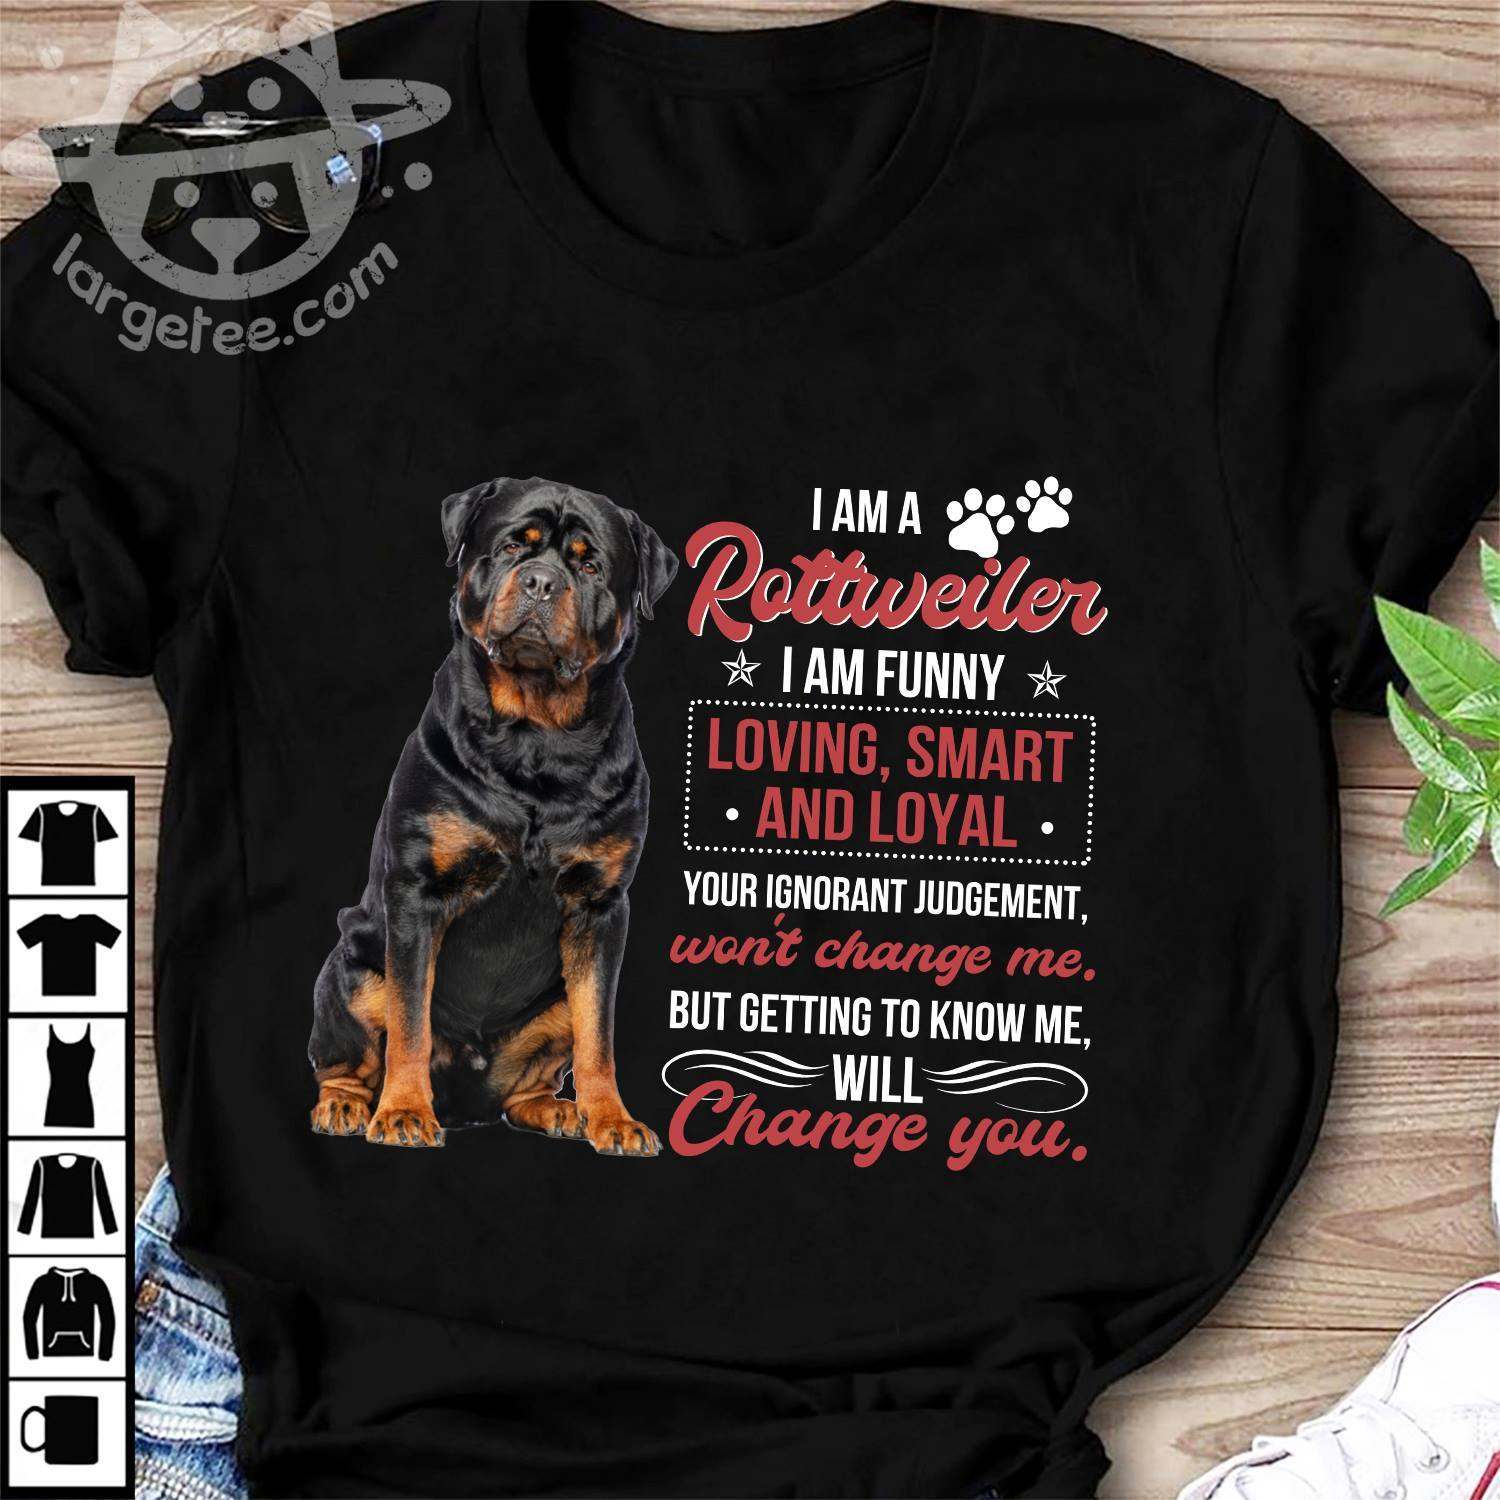 I am a rottweiler I am funny loving, smart and loyal - Rottweiler dog